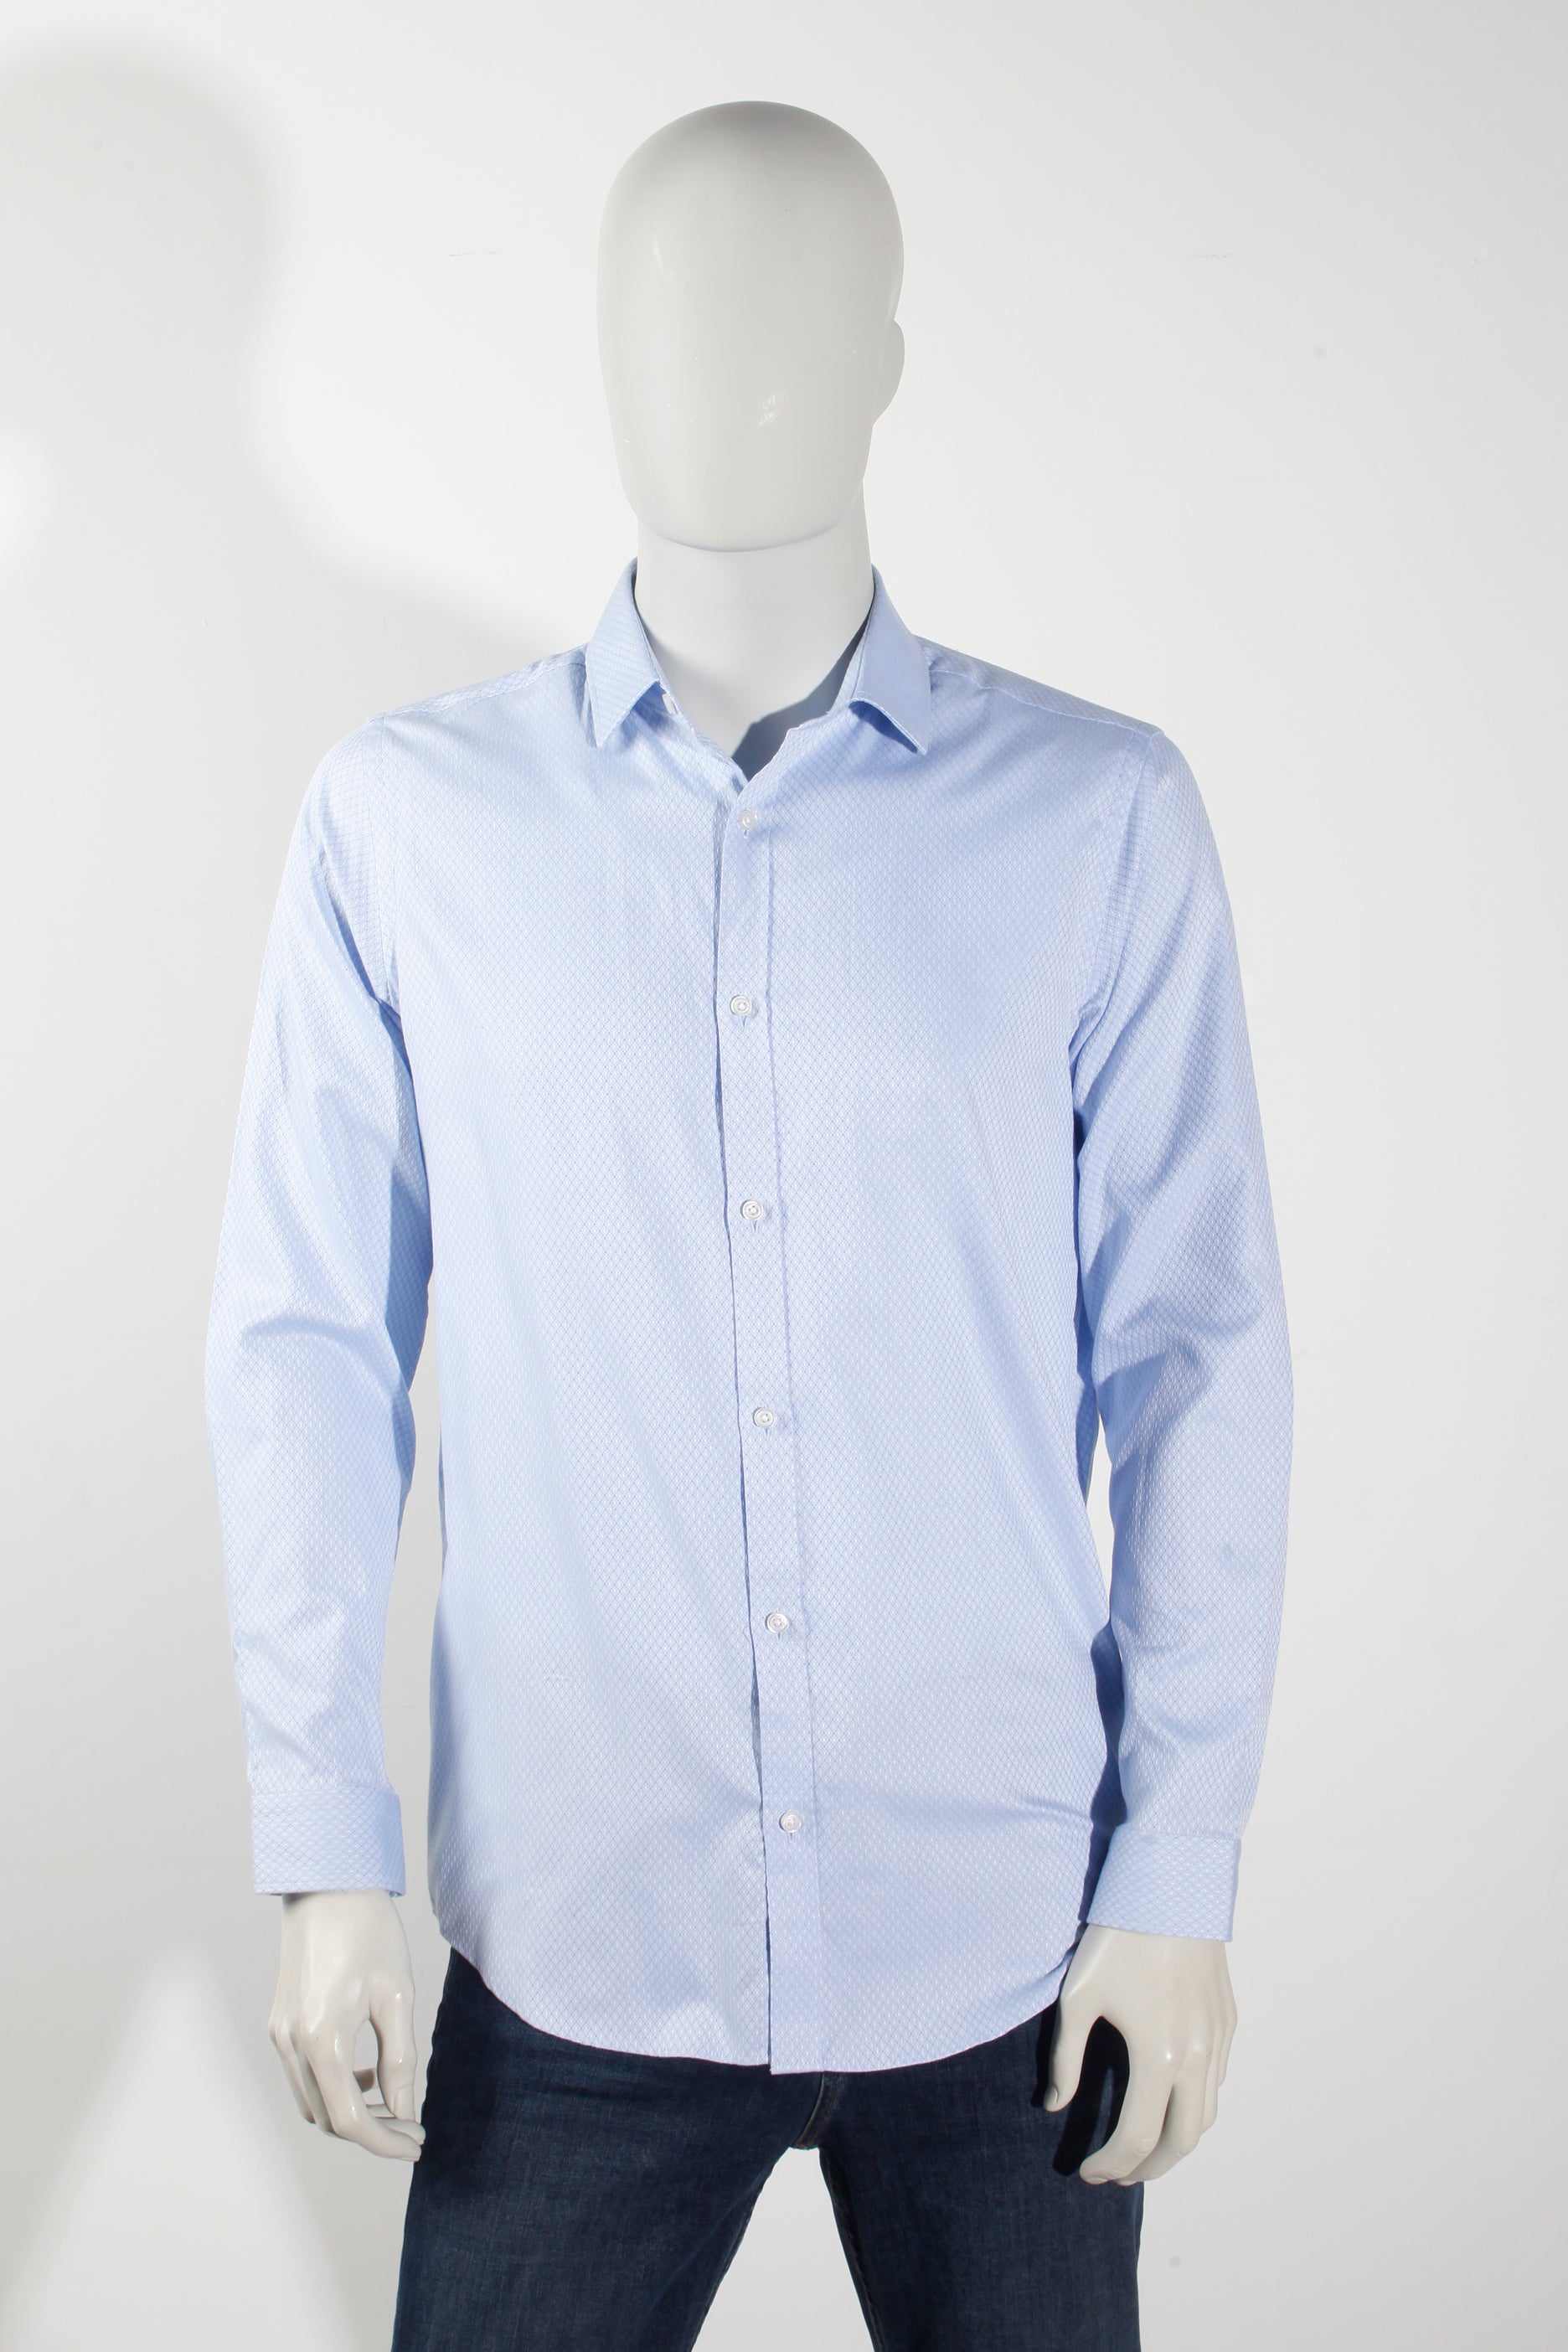 Men's Blue Shirt (Medium)